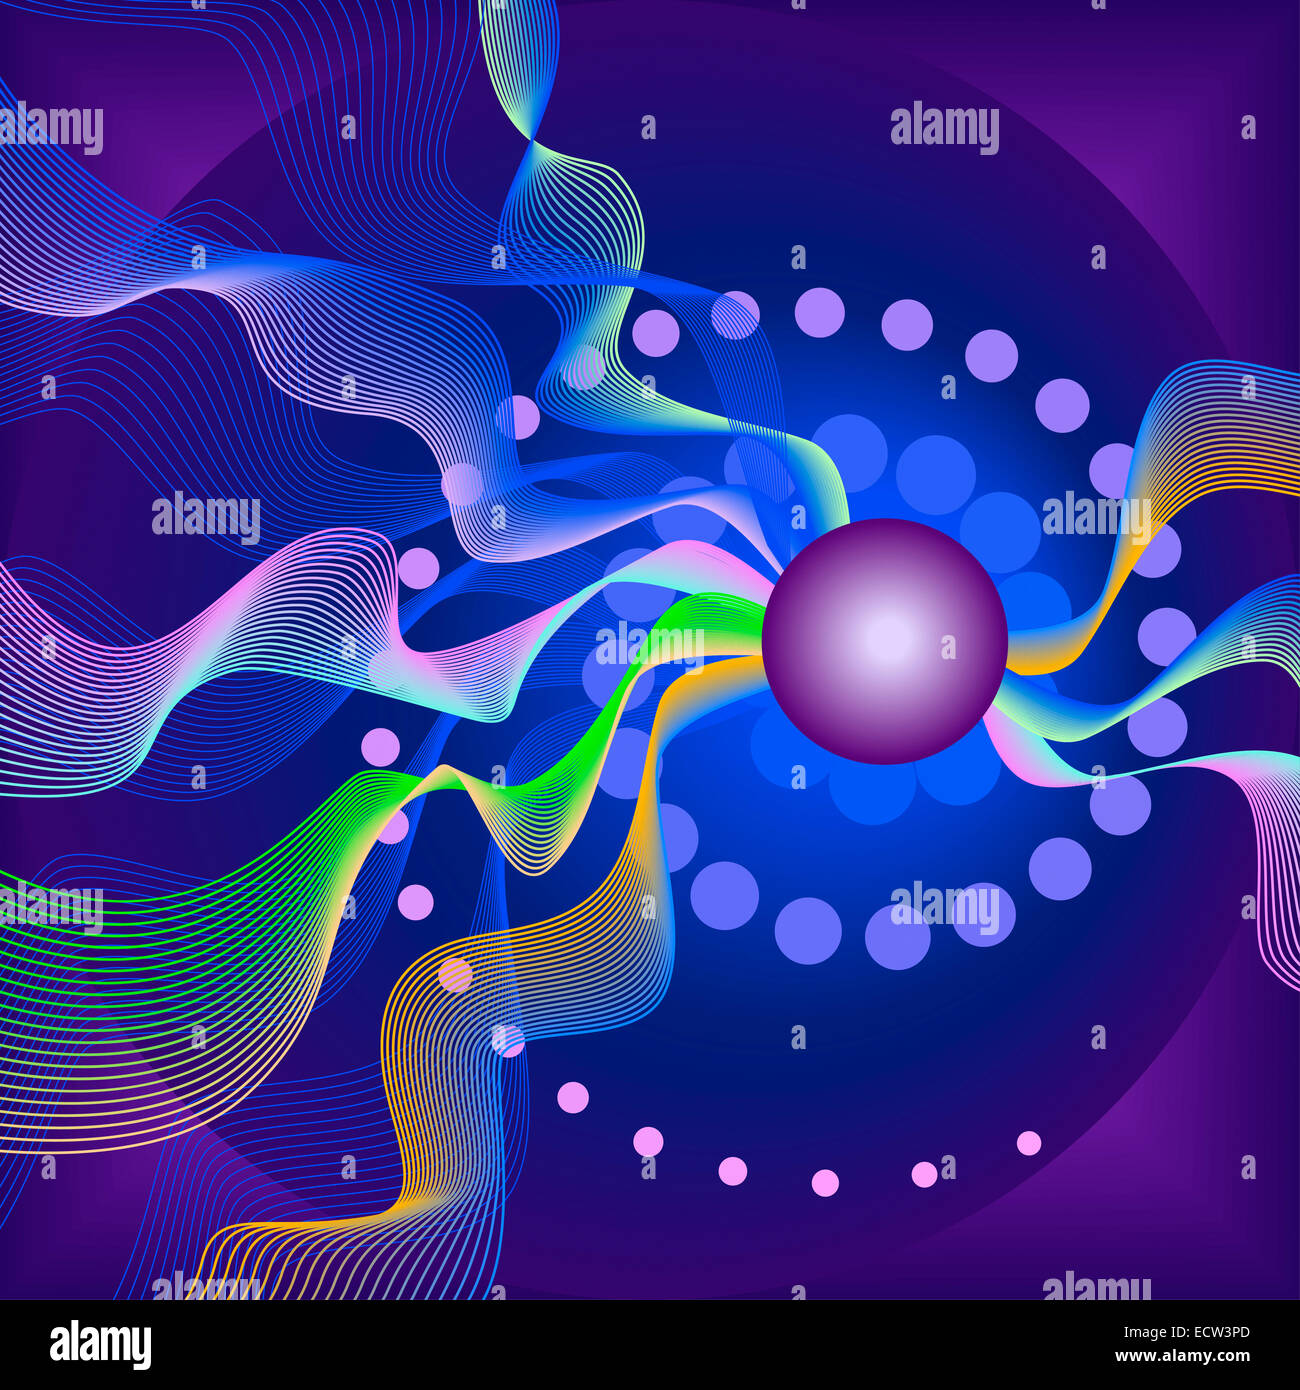 Abstract colorful wave and circles wallpaper. Stock Photo